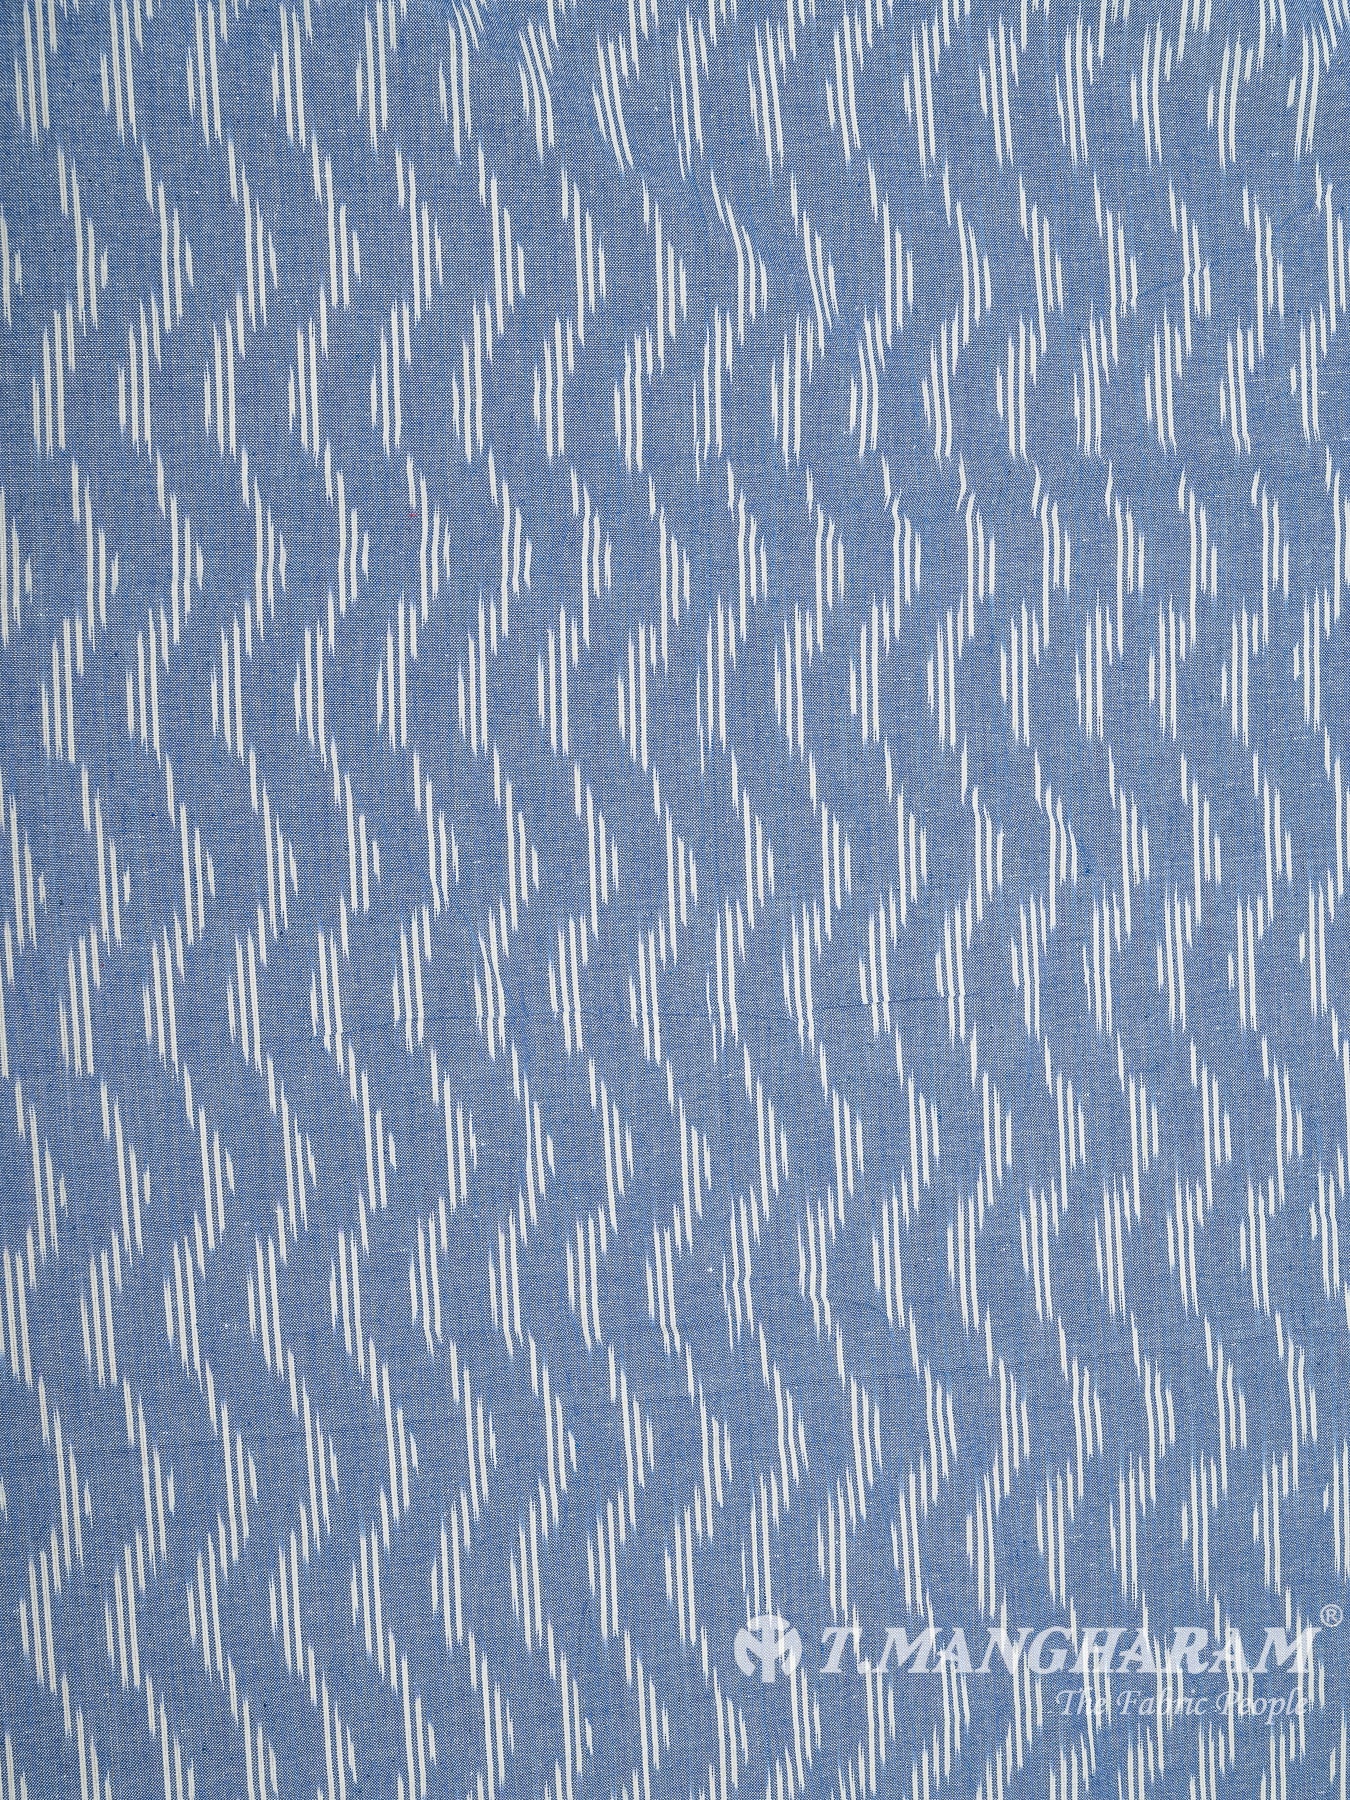 Blue Cotton Ikat Print Fabric - EB5832 view-3